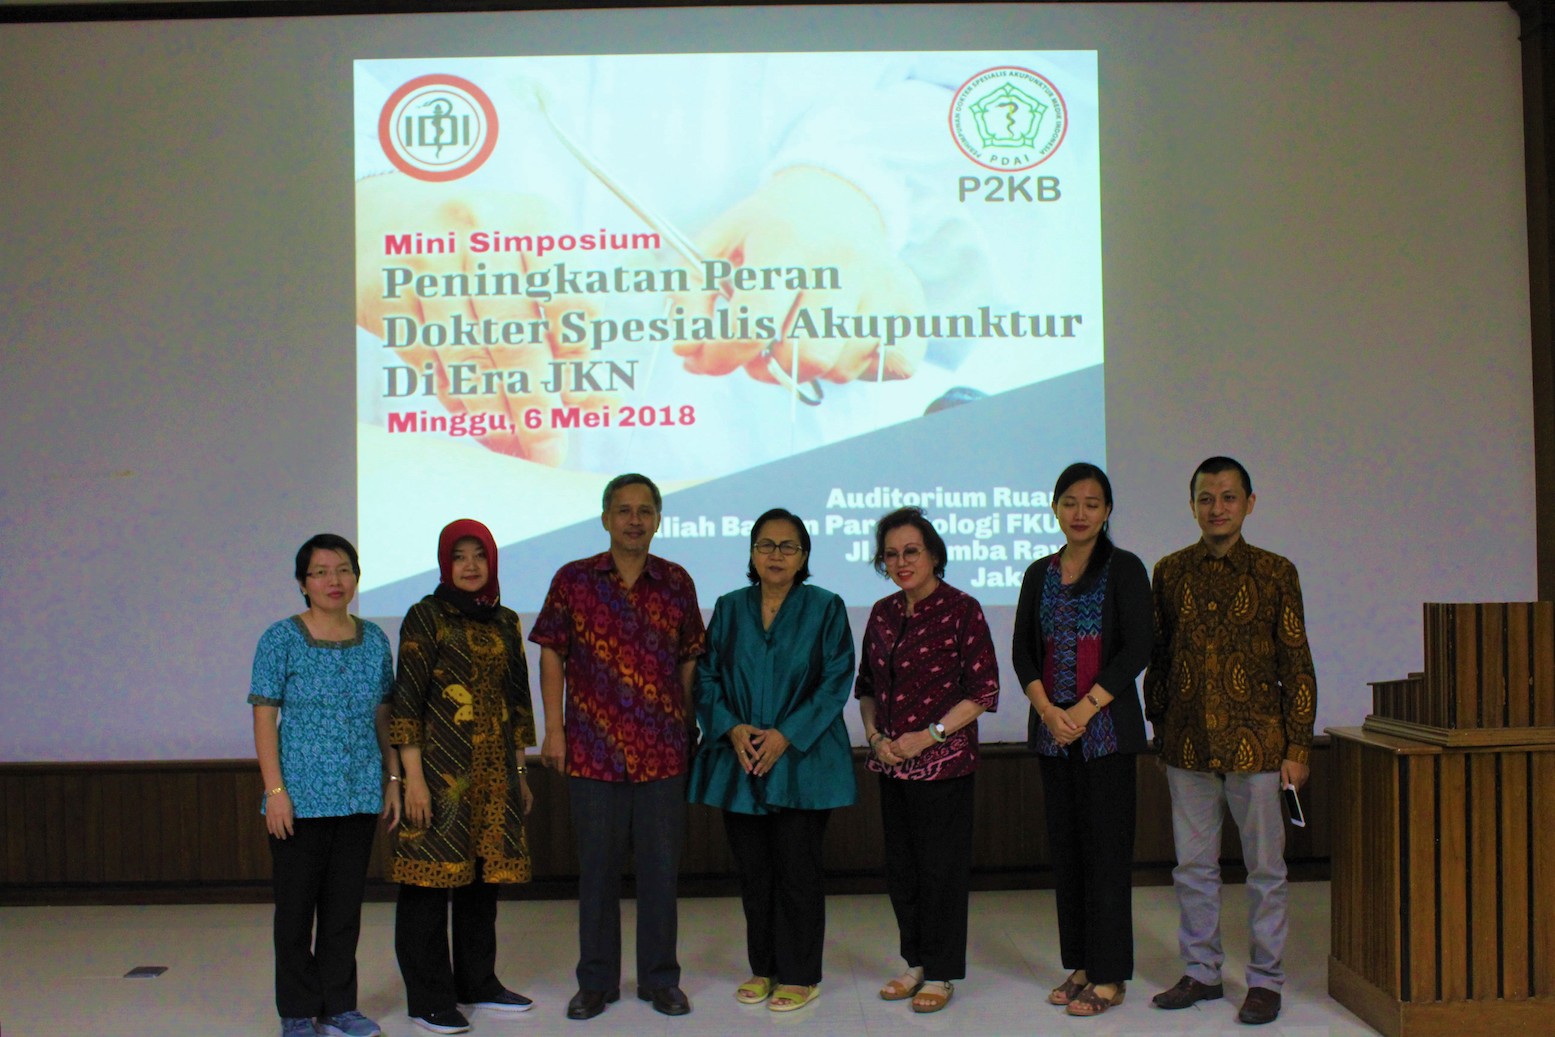 Peningkatan Peran Dokter Spesialis Akupunktur di Era JKN - 060518 - Perhimpunan Dokter Spesialis Akupunktur Medik Indonesia